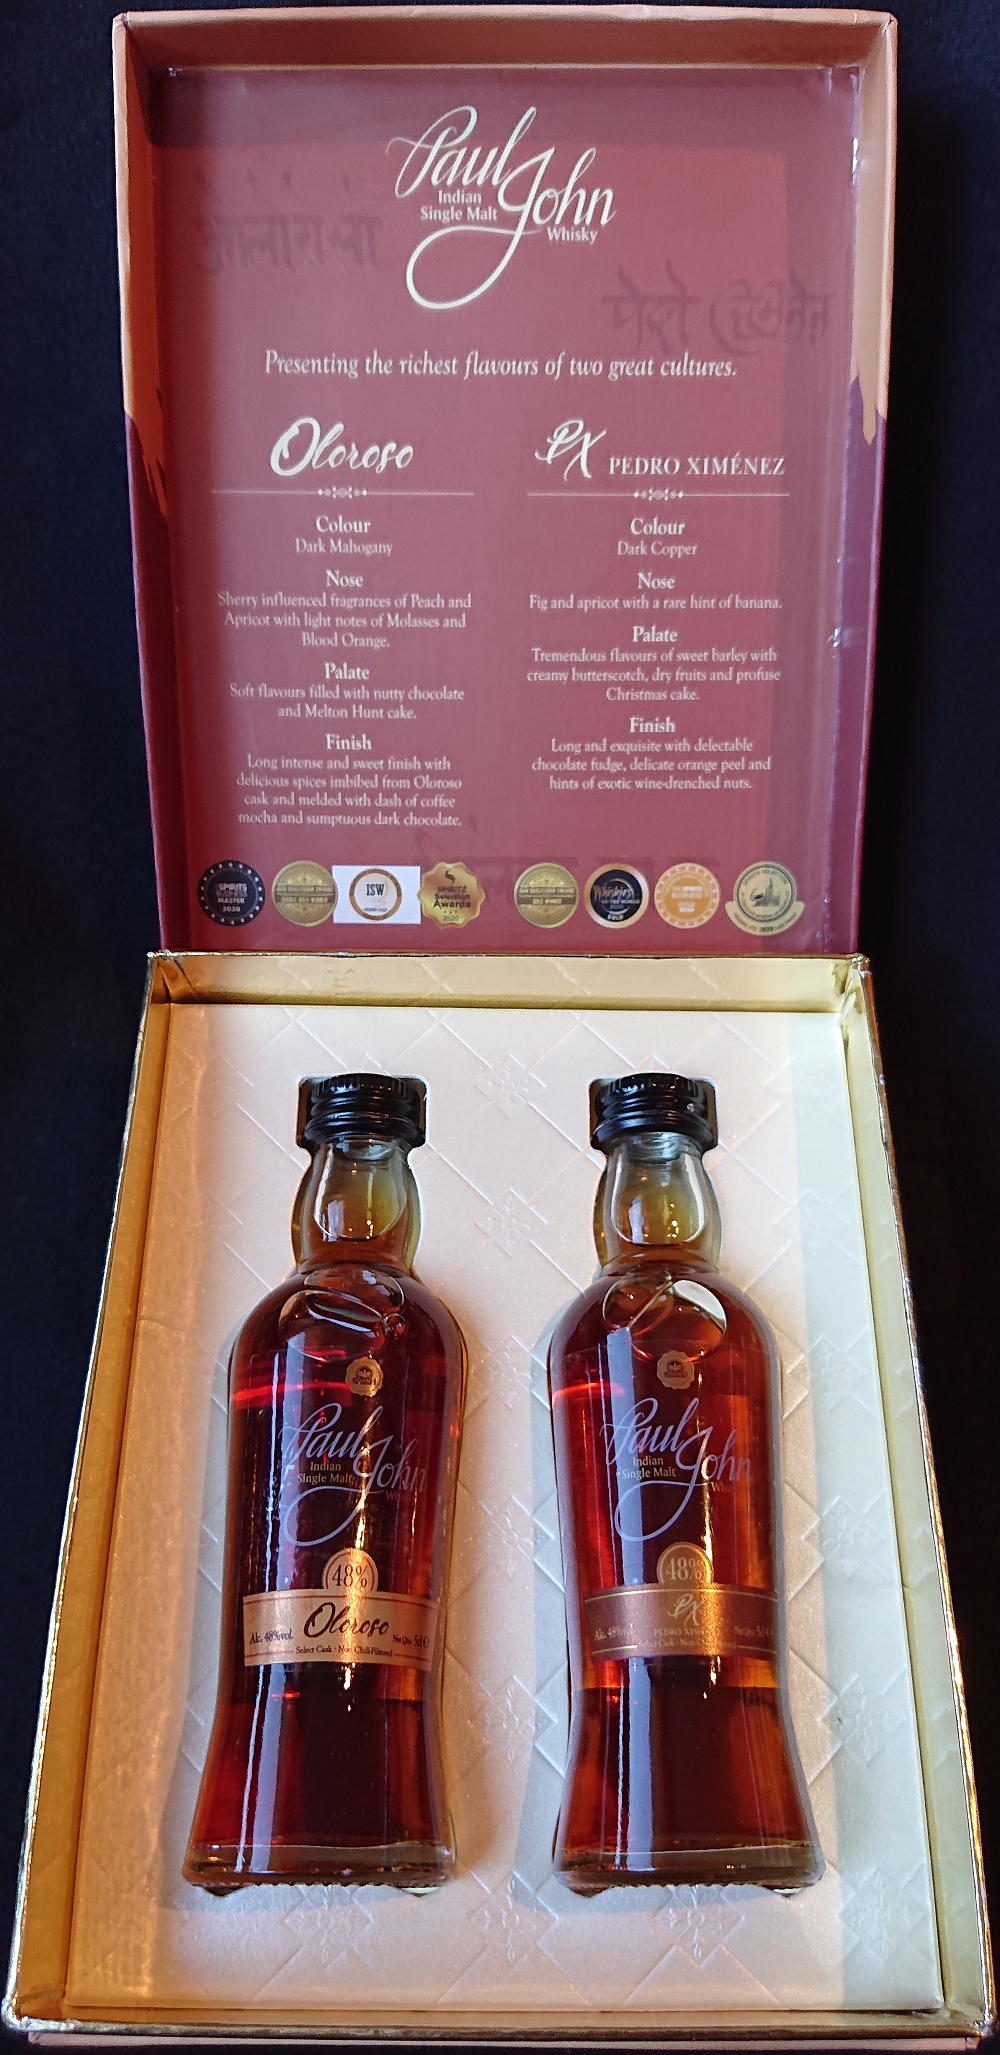 Paul John
Indian Single Malt Whisky
Presenting the richest flavours of two great cultures
Oloroso - 48%
PX Pedro Ximénez - 48%